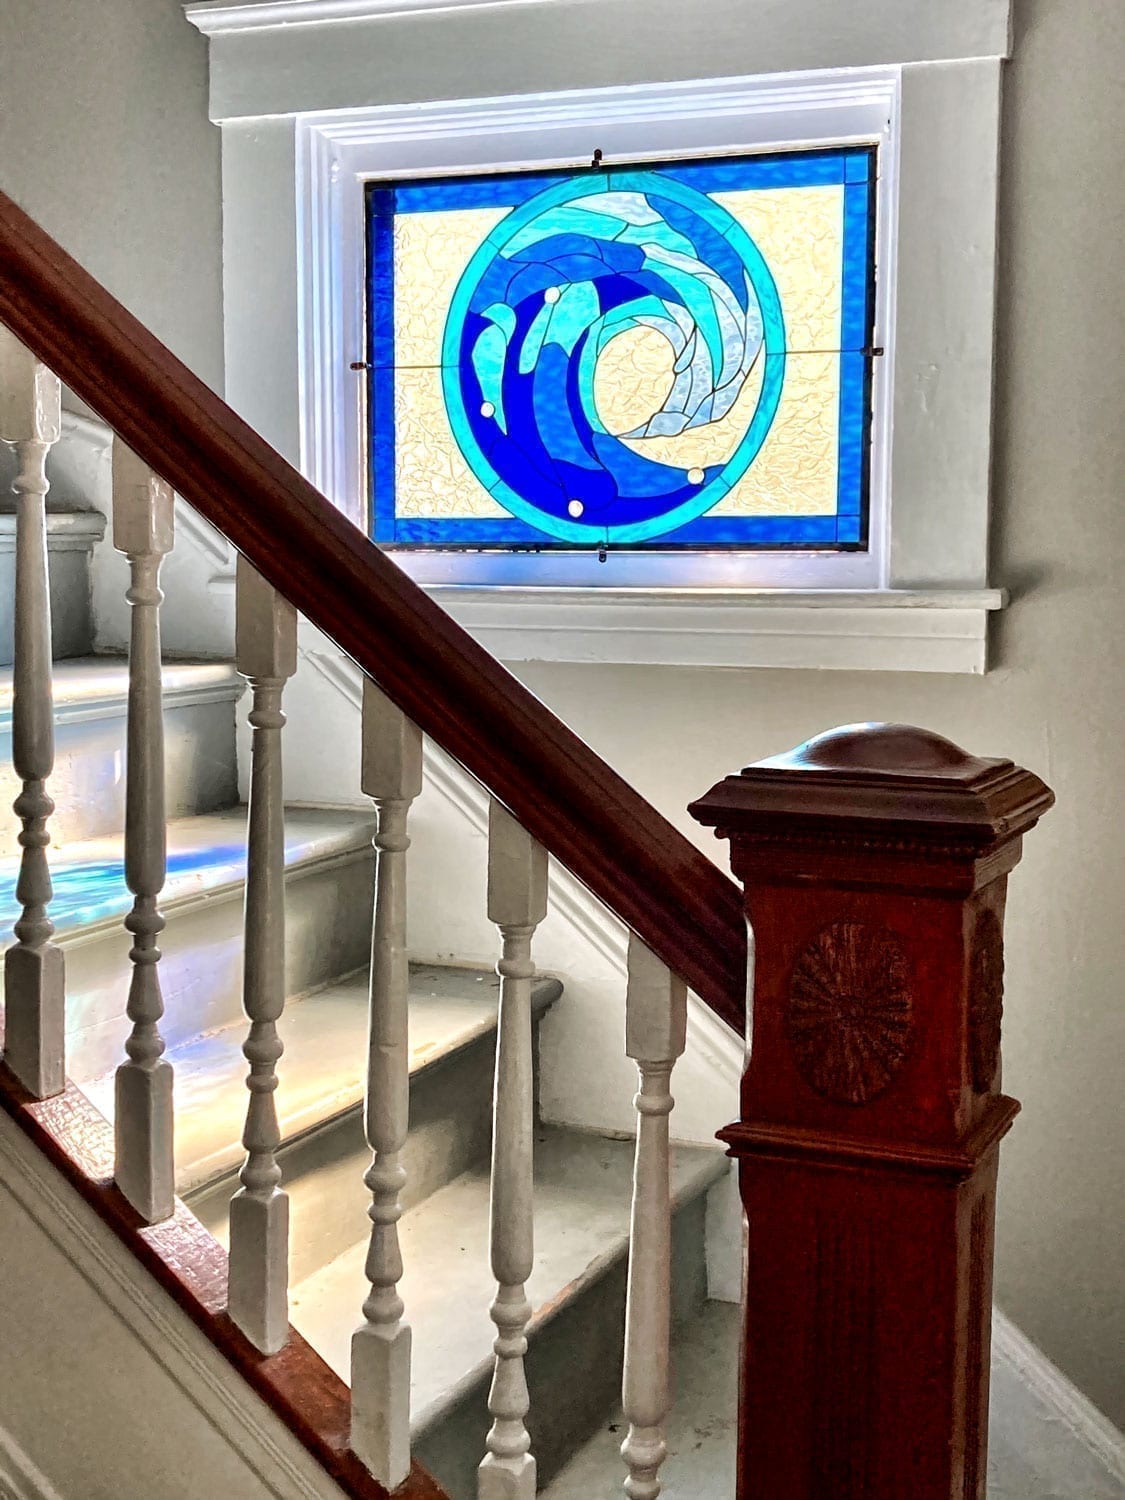 Deep Blue Cresting wave design installed in a Stairway Window